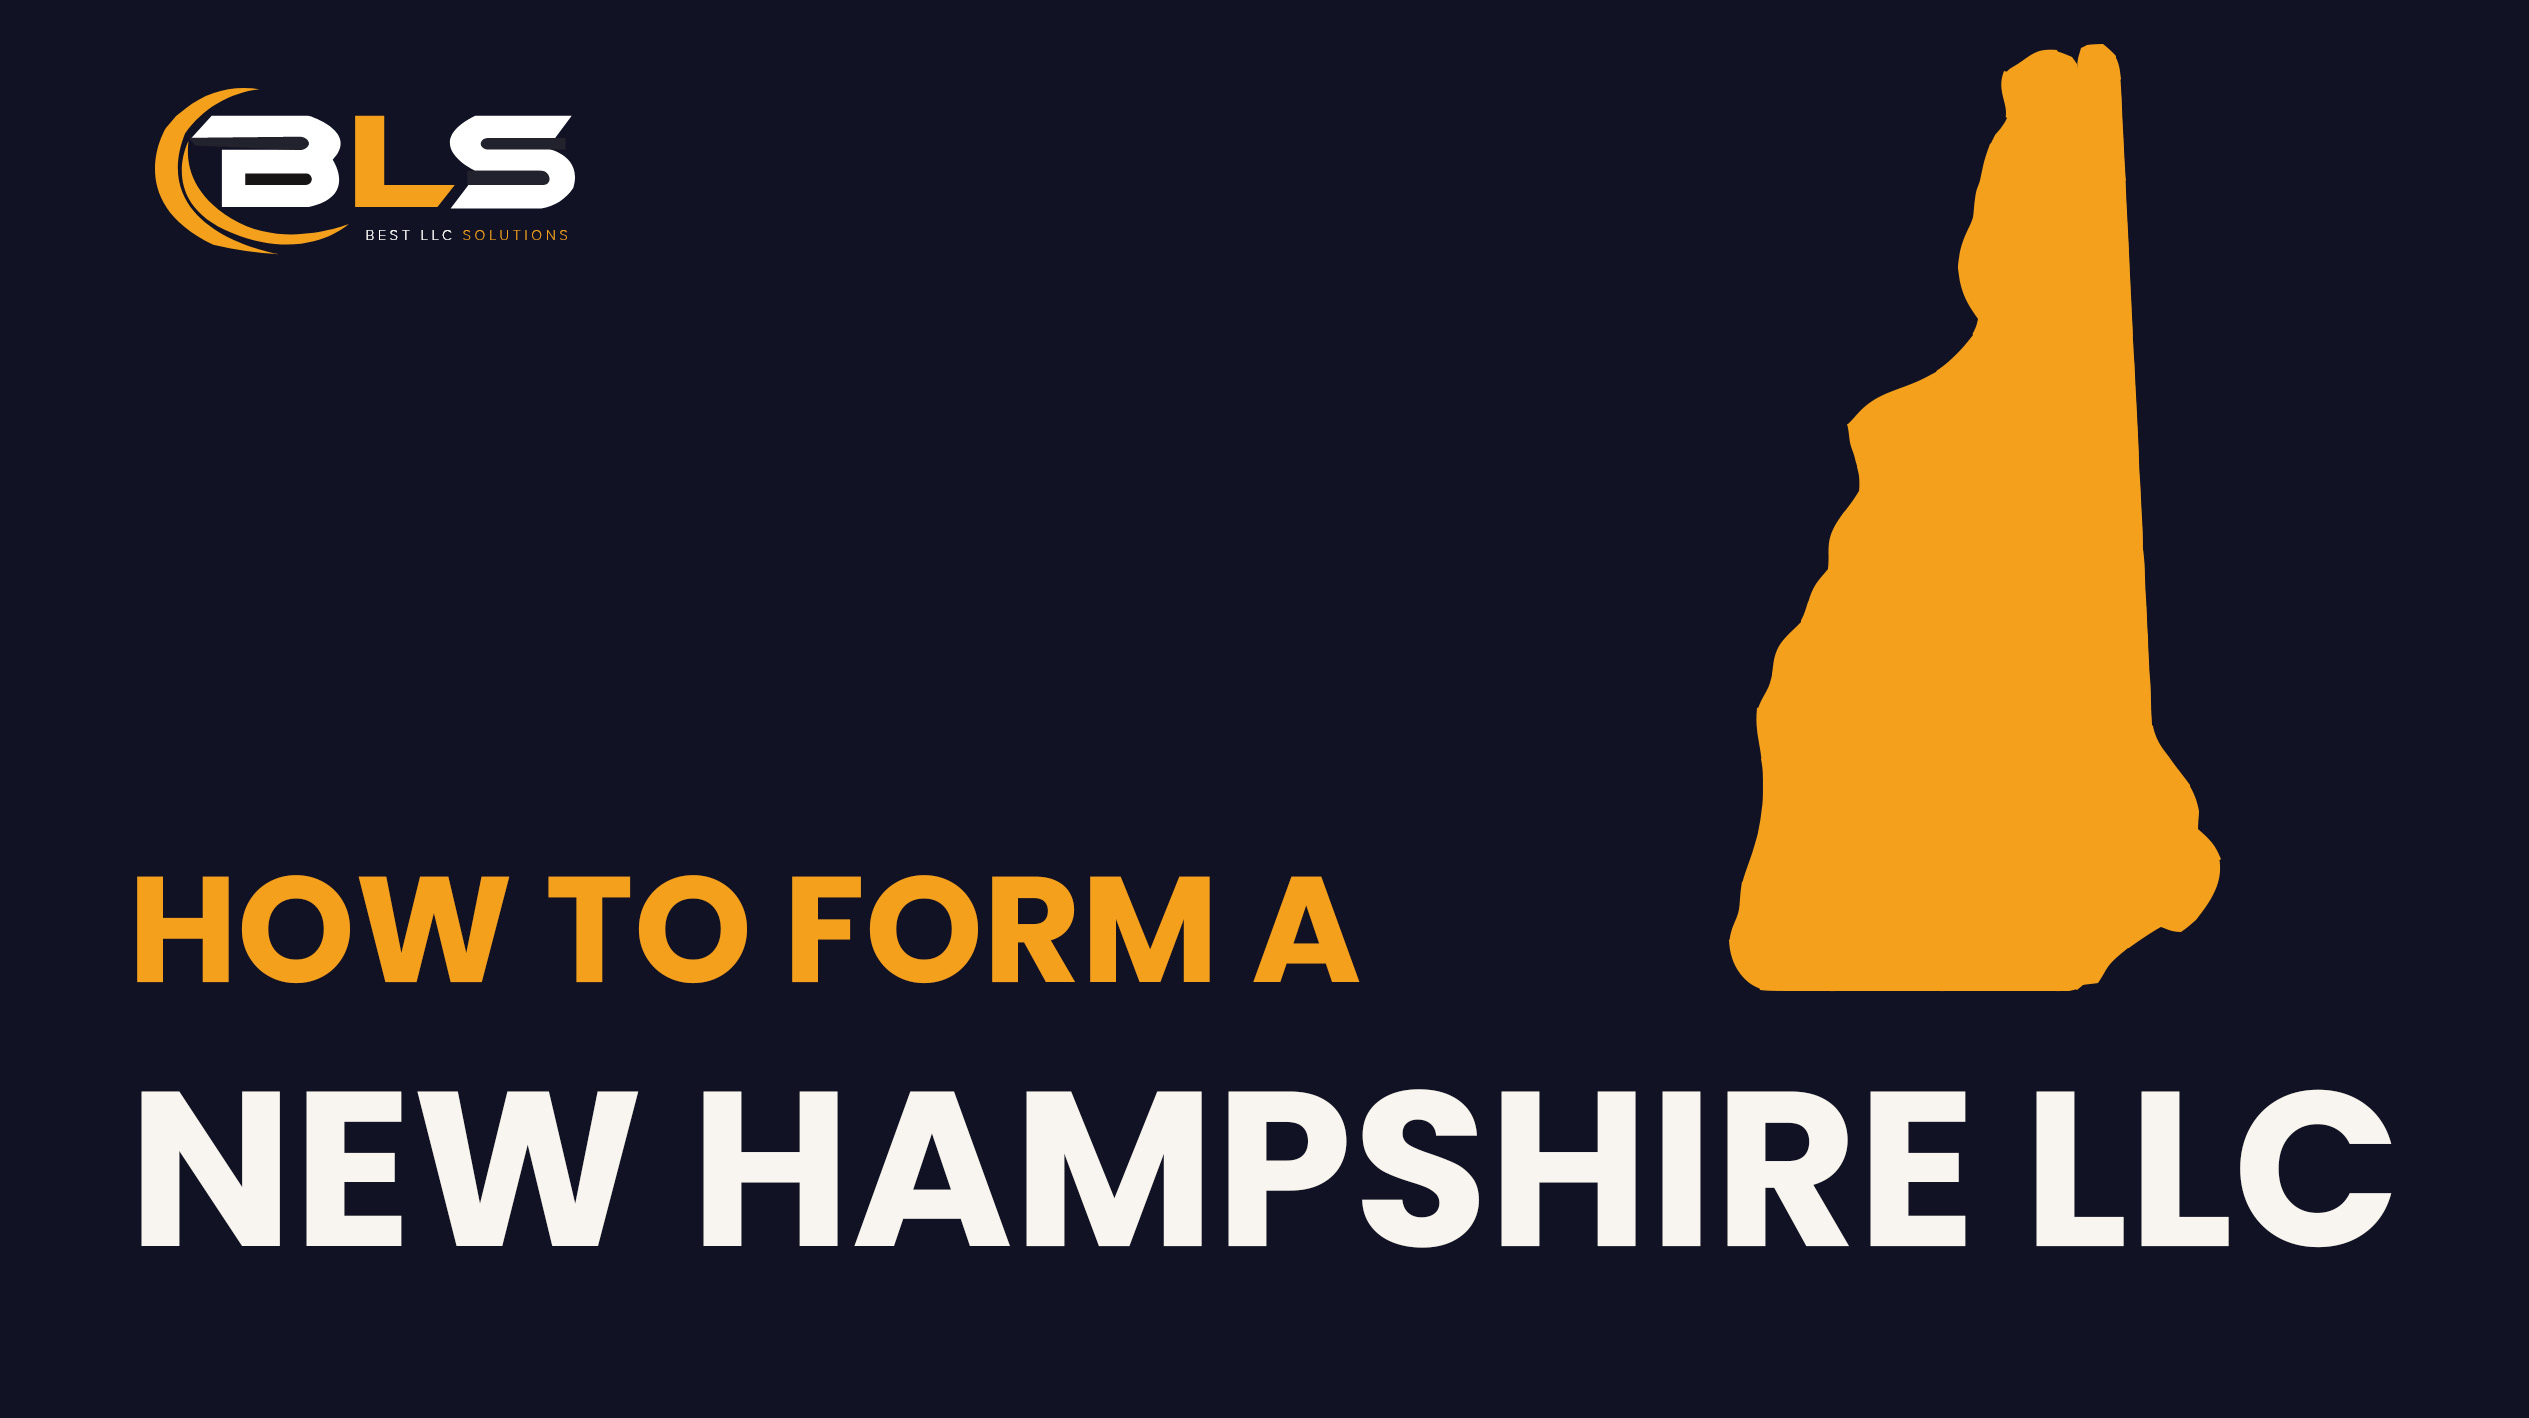 New Hampshire LLC